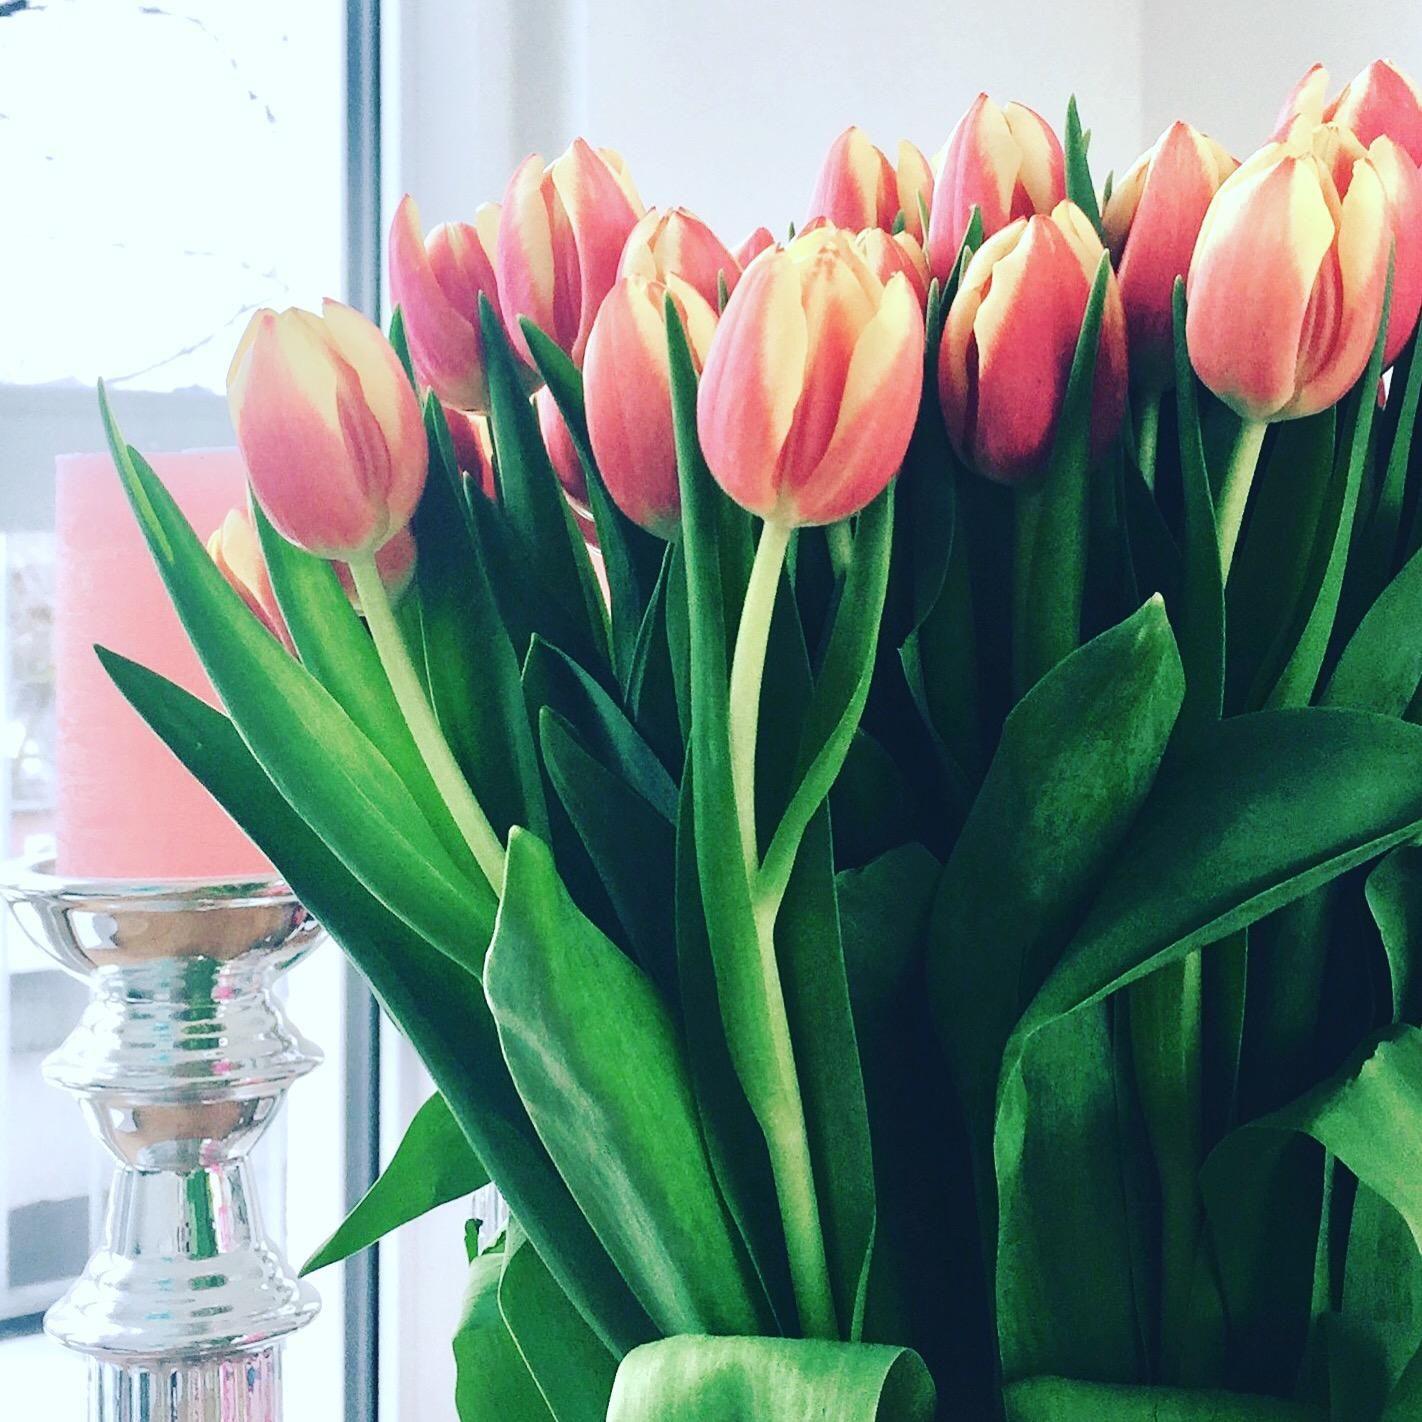 Der Frühling kommt. #frühling #tulpen #blumenliebe 